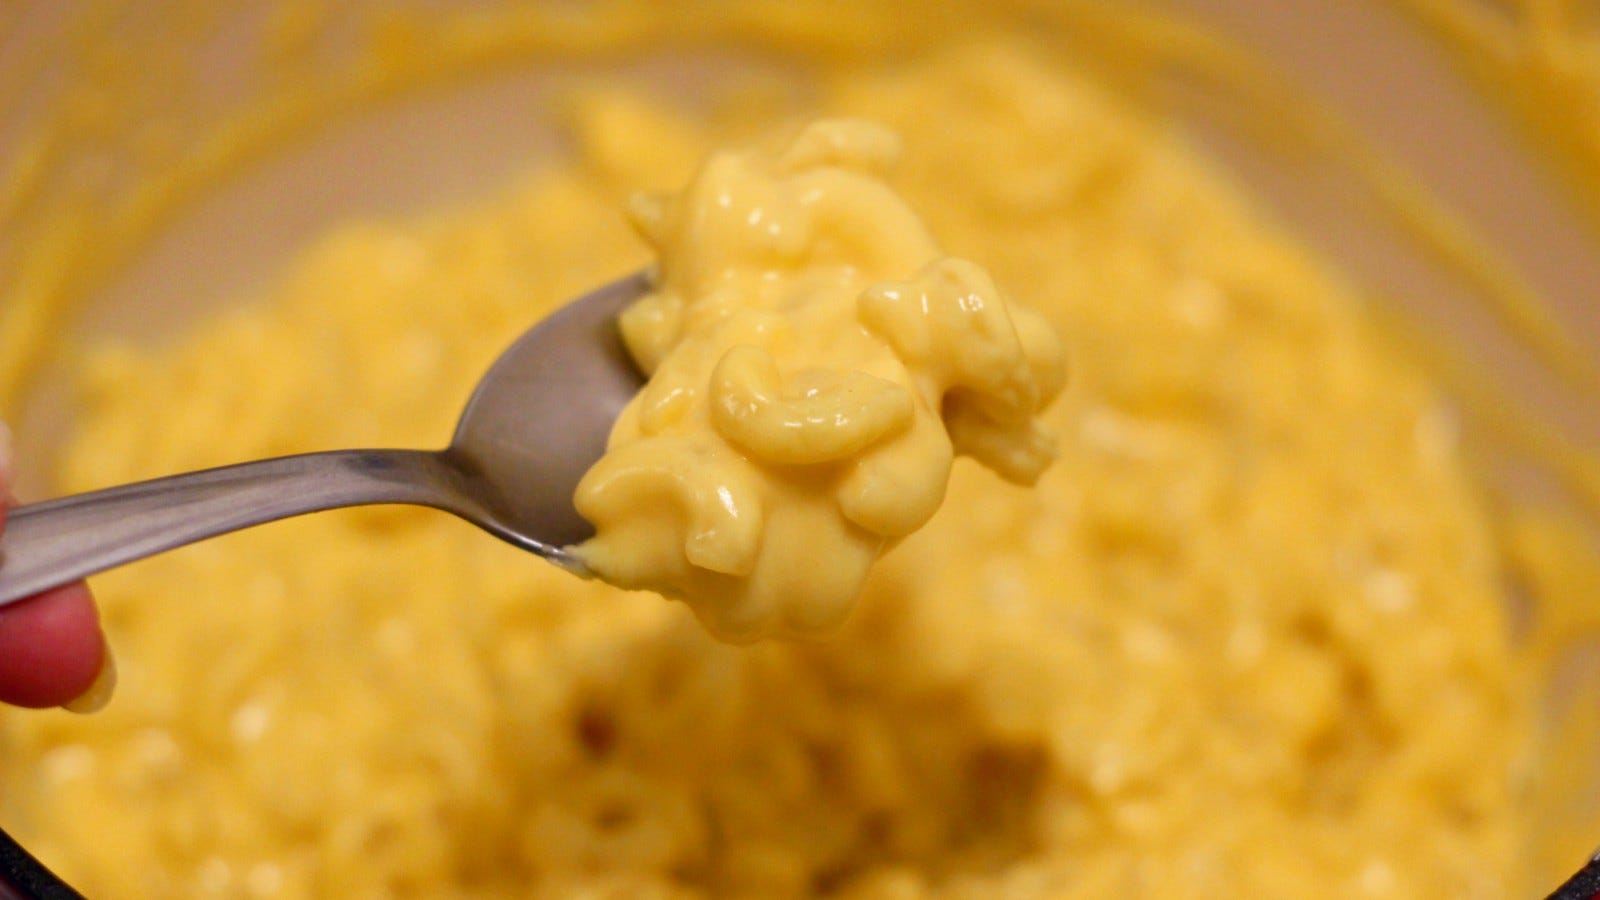 macaroni and cheese roux